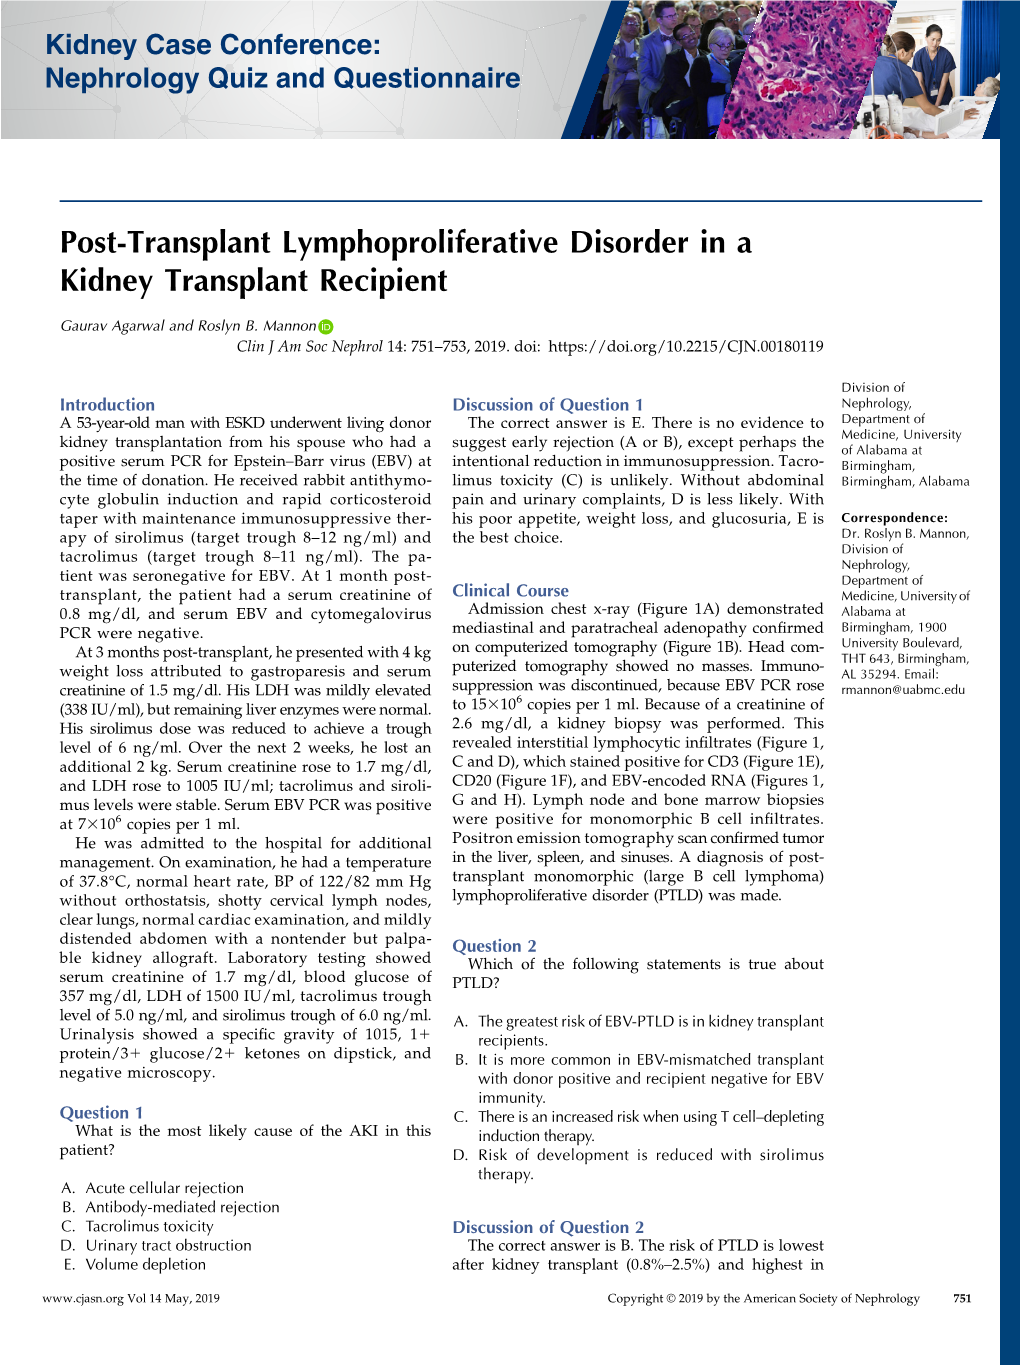 Post-Transplant Lymphoproliferative Disorder in a Kidney Transplant Recipient